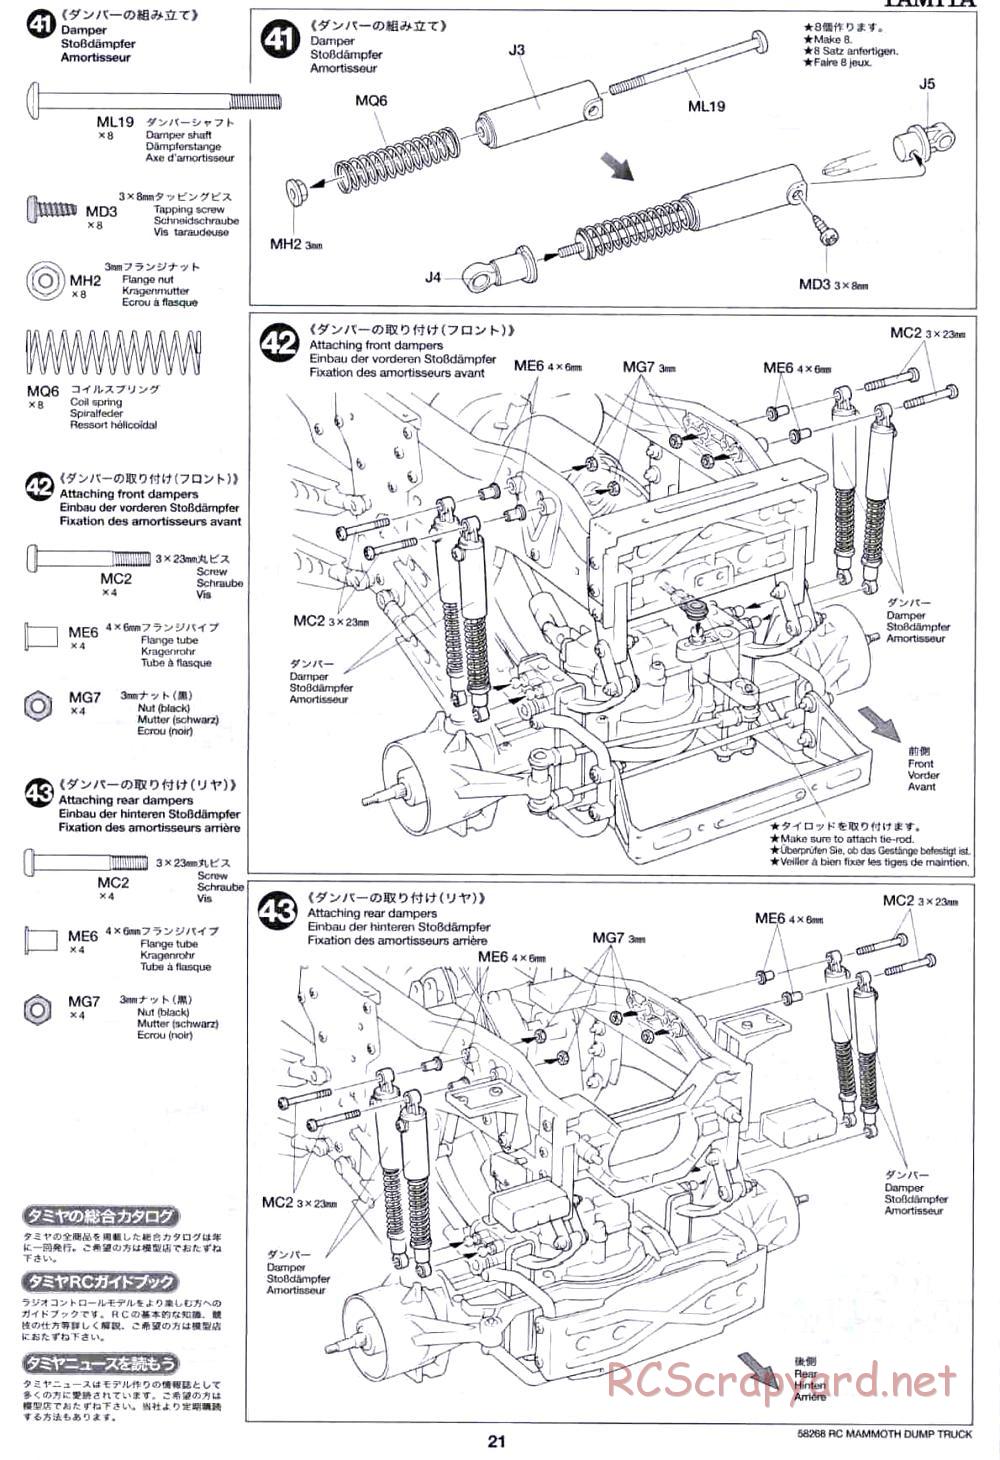 Tamiya - Mammoth Dump Truck Chassis - Manual - Page 21